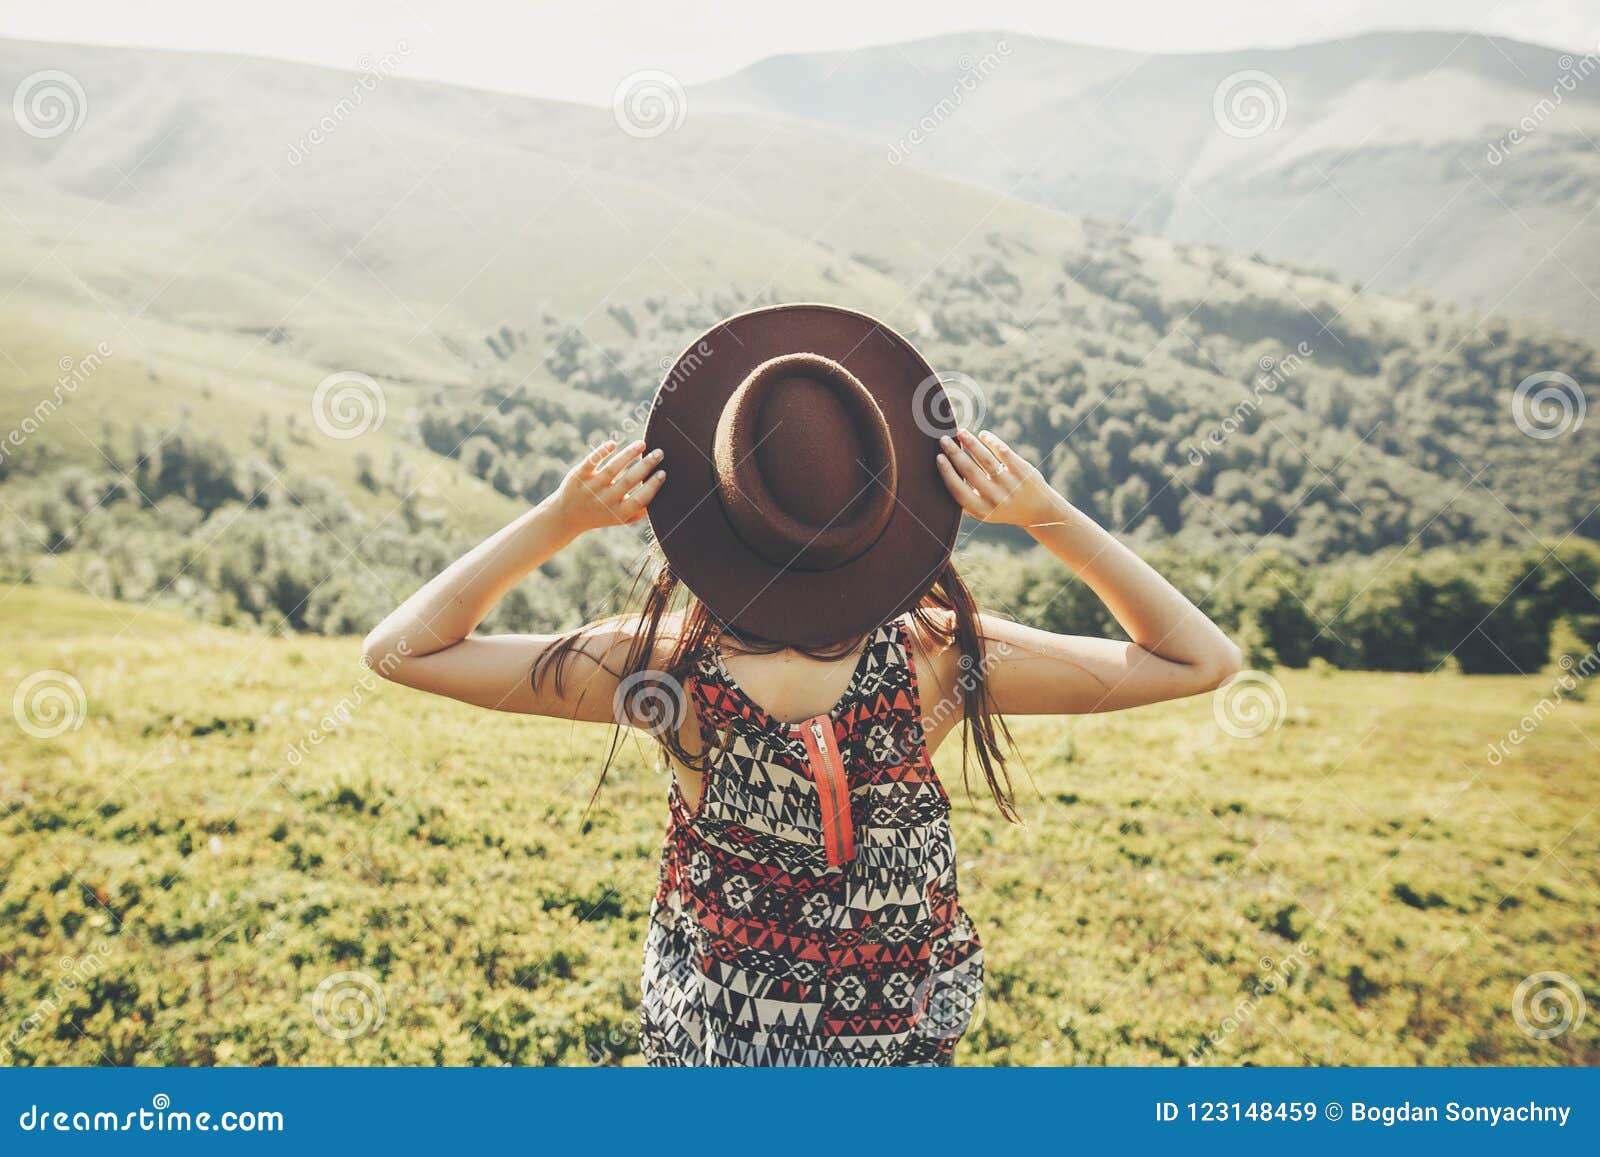 travel and wanderlust concept. traveler hipster girl holding hat